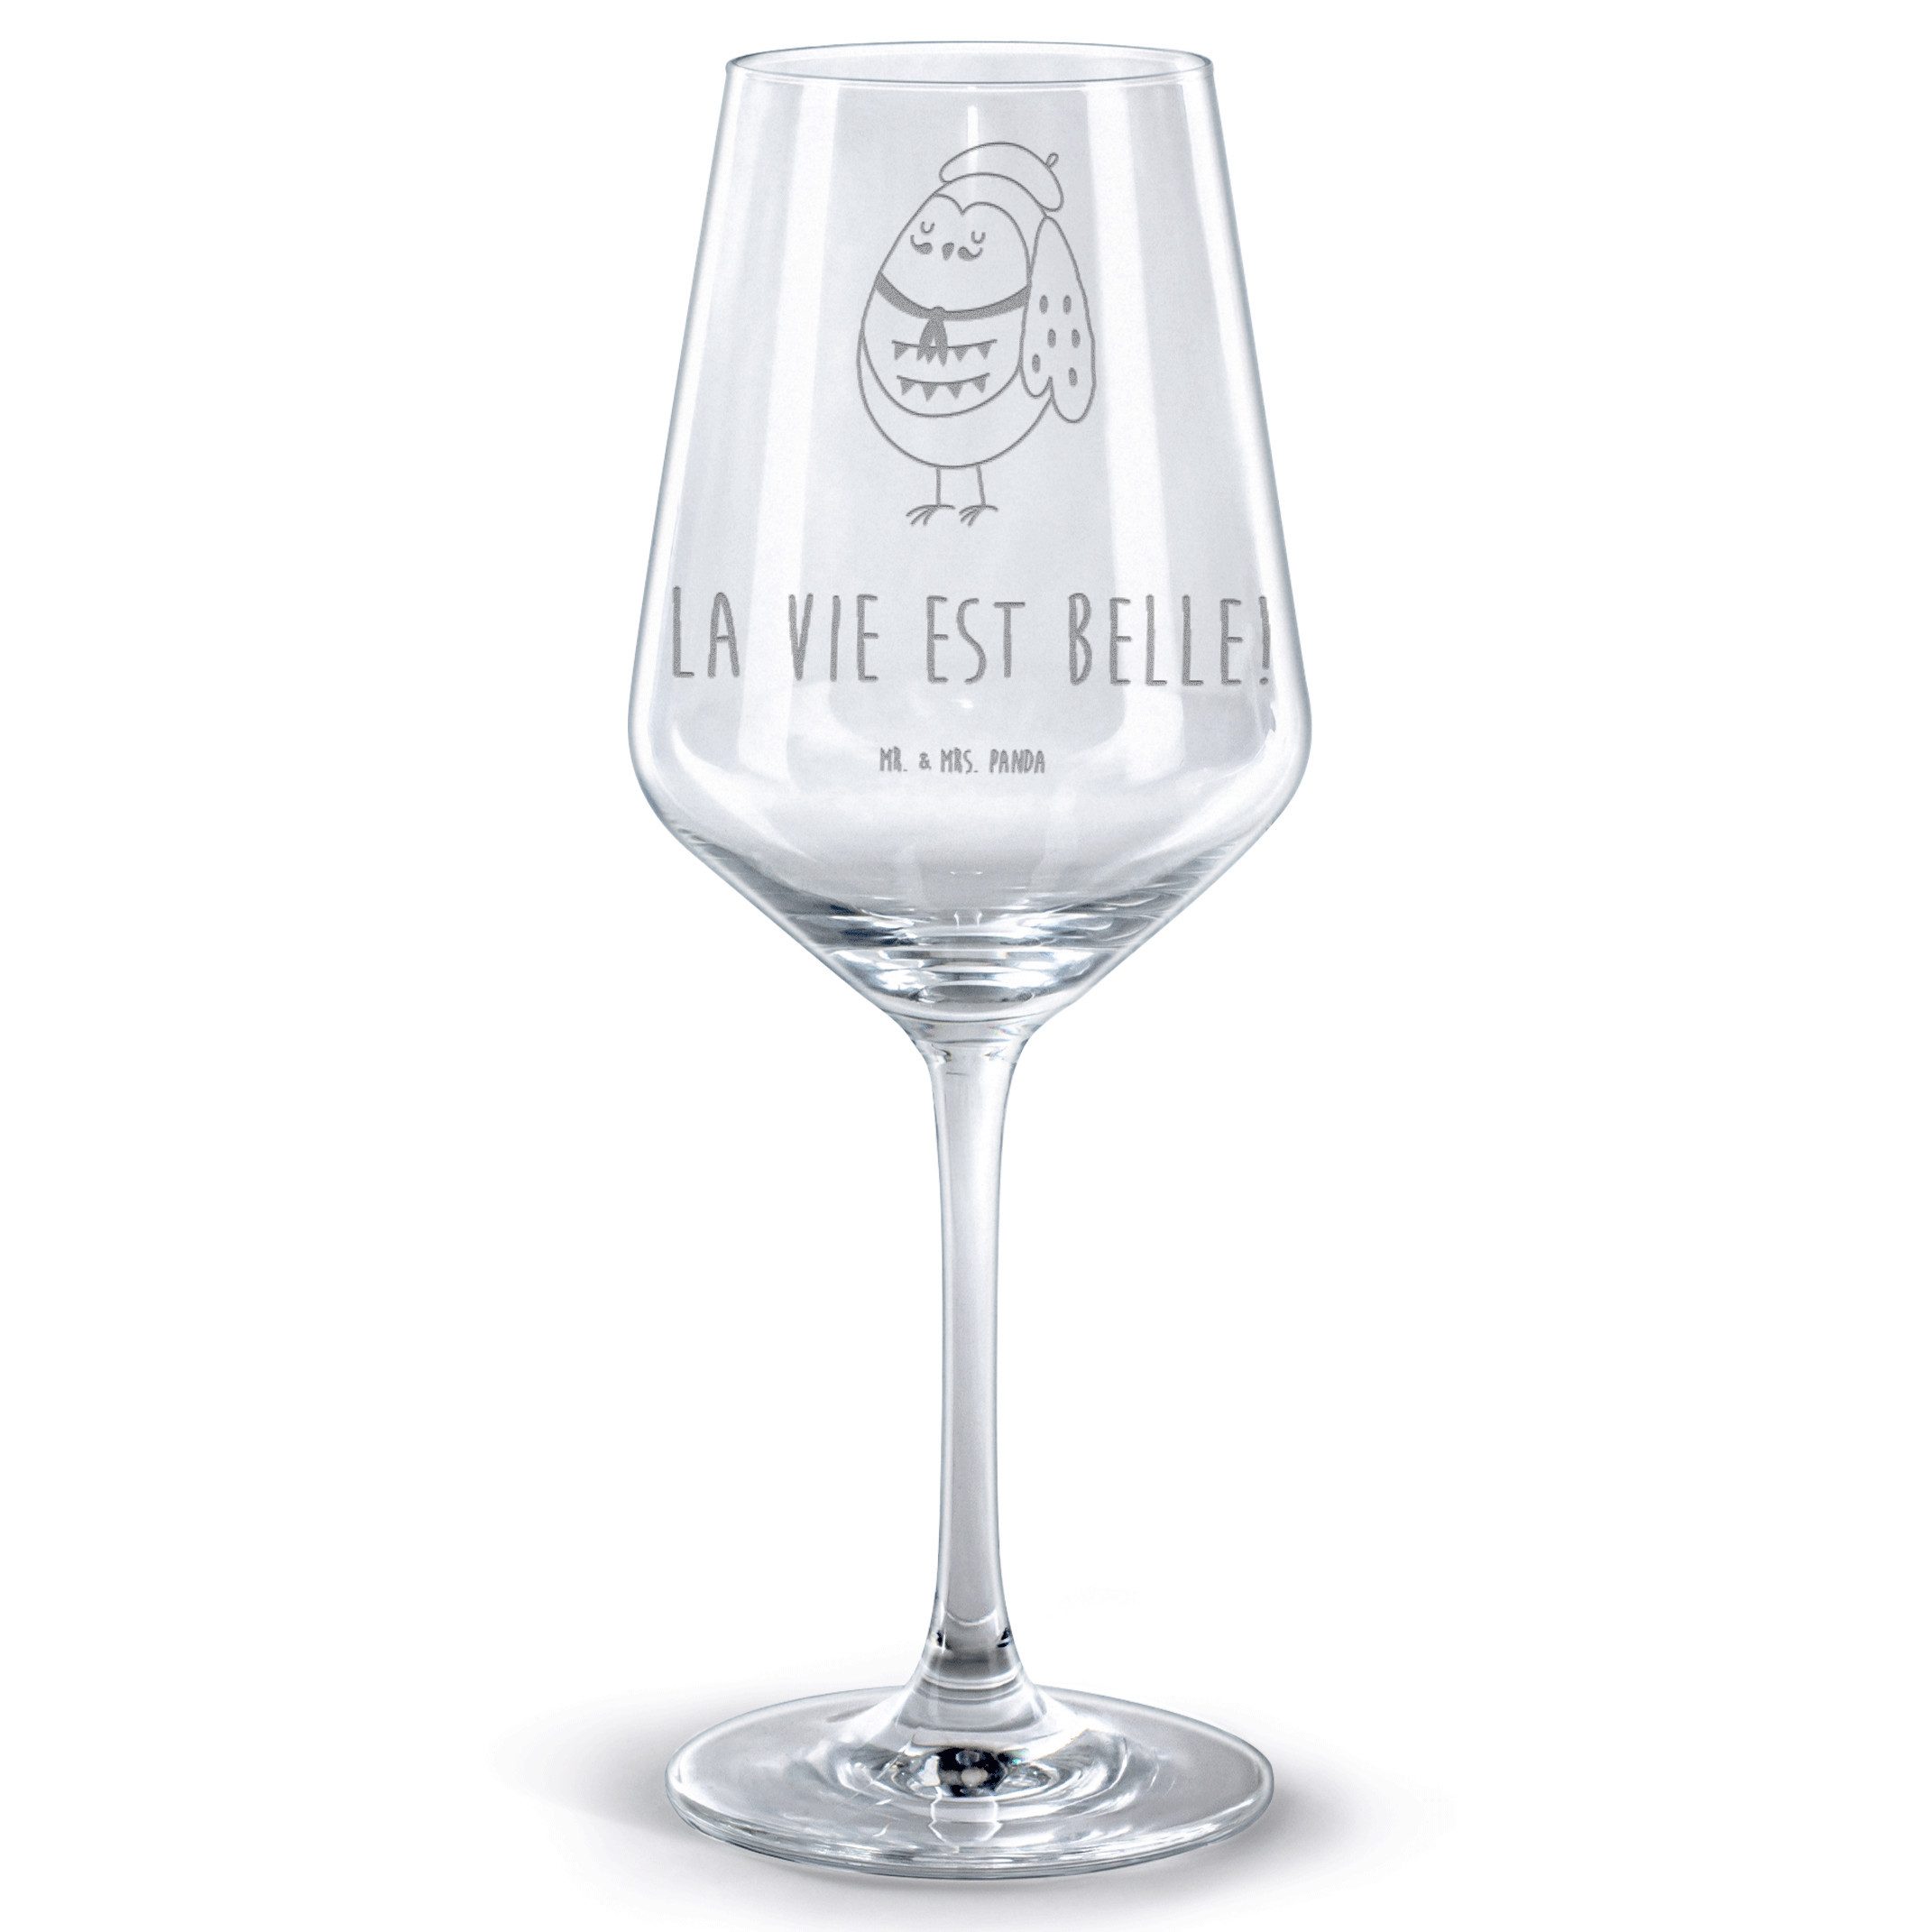 Mr. & Mrs. Panda Rotweinglas Eule Frankreich - Transparent - Geschenk, Eule Deko, Rotweinglas, glü, Premium Glas, Luxuriöse Gravur